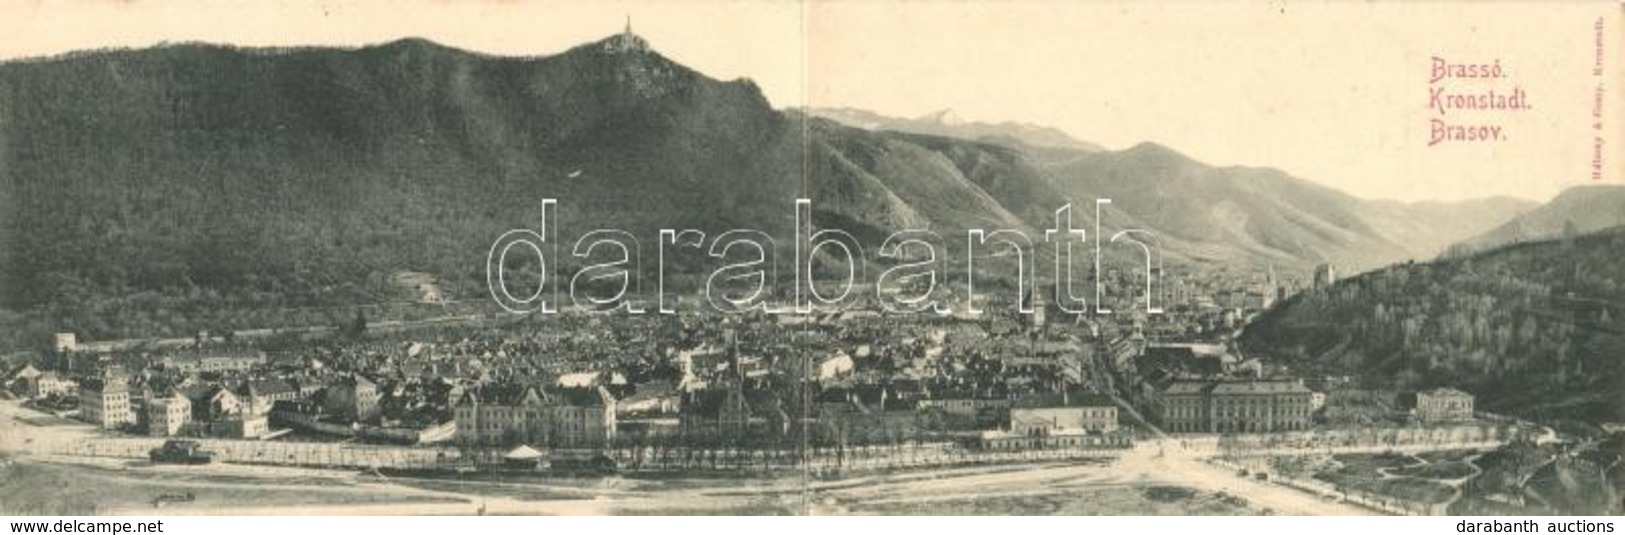 T2 1899 Brassó, Kronstadt, Brasov; Panorámalap / Panoramacard - Ohne Zuordnung